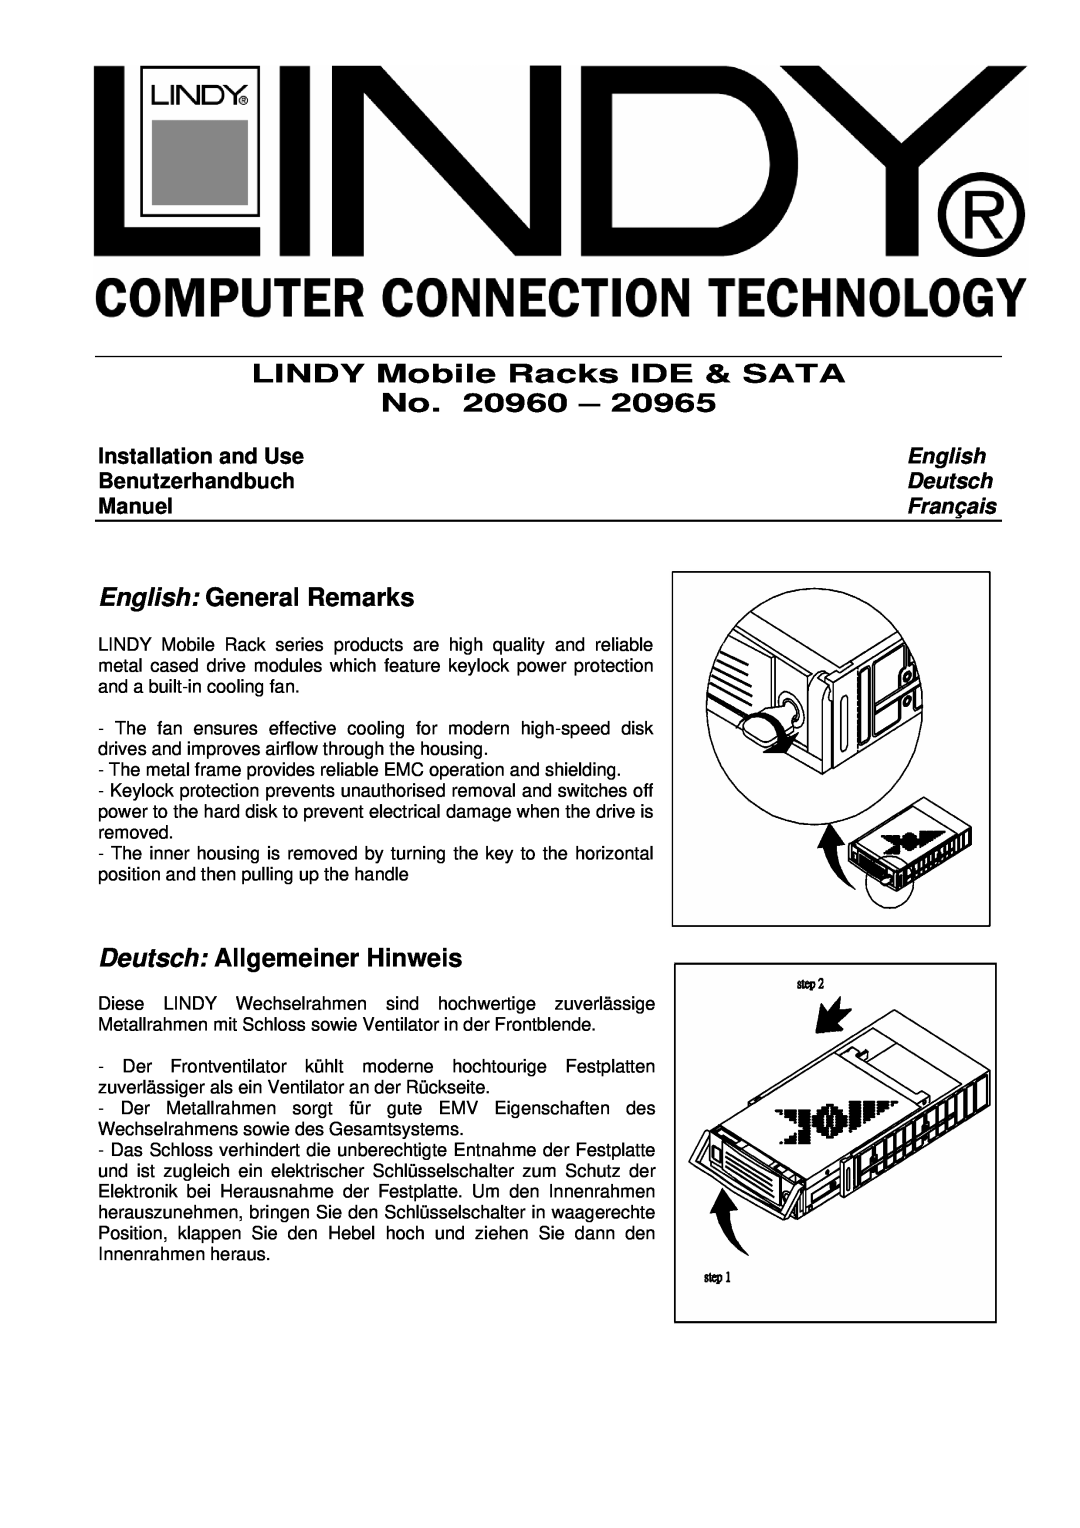 Lindy manual LINDY Mobile Racks IDE & SATA No. 20960, English General Remarks, Deutsch Allgemeiner Hinweis, Manuel 